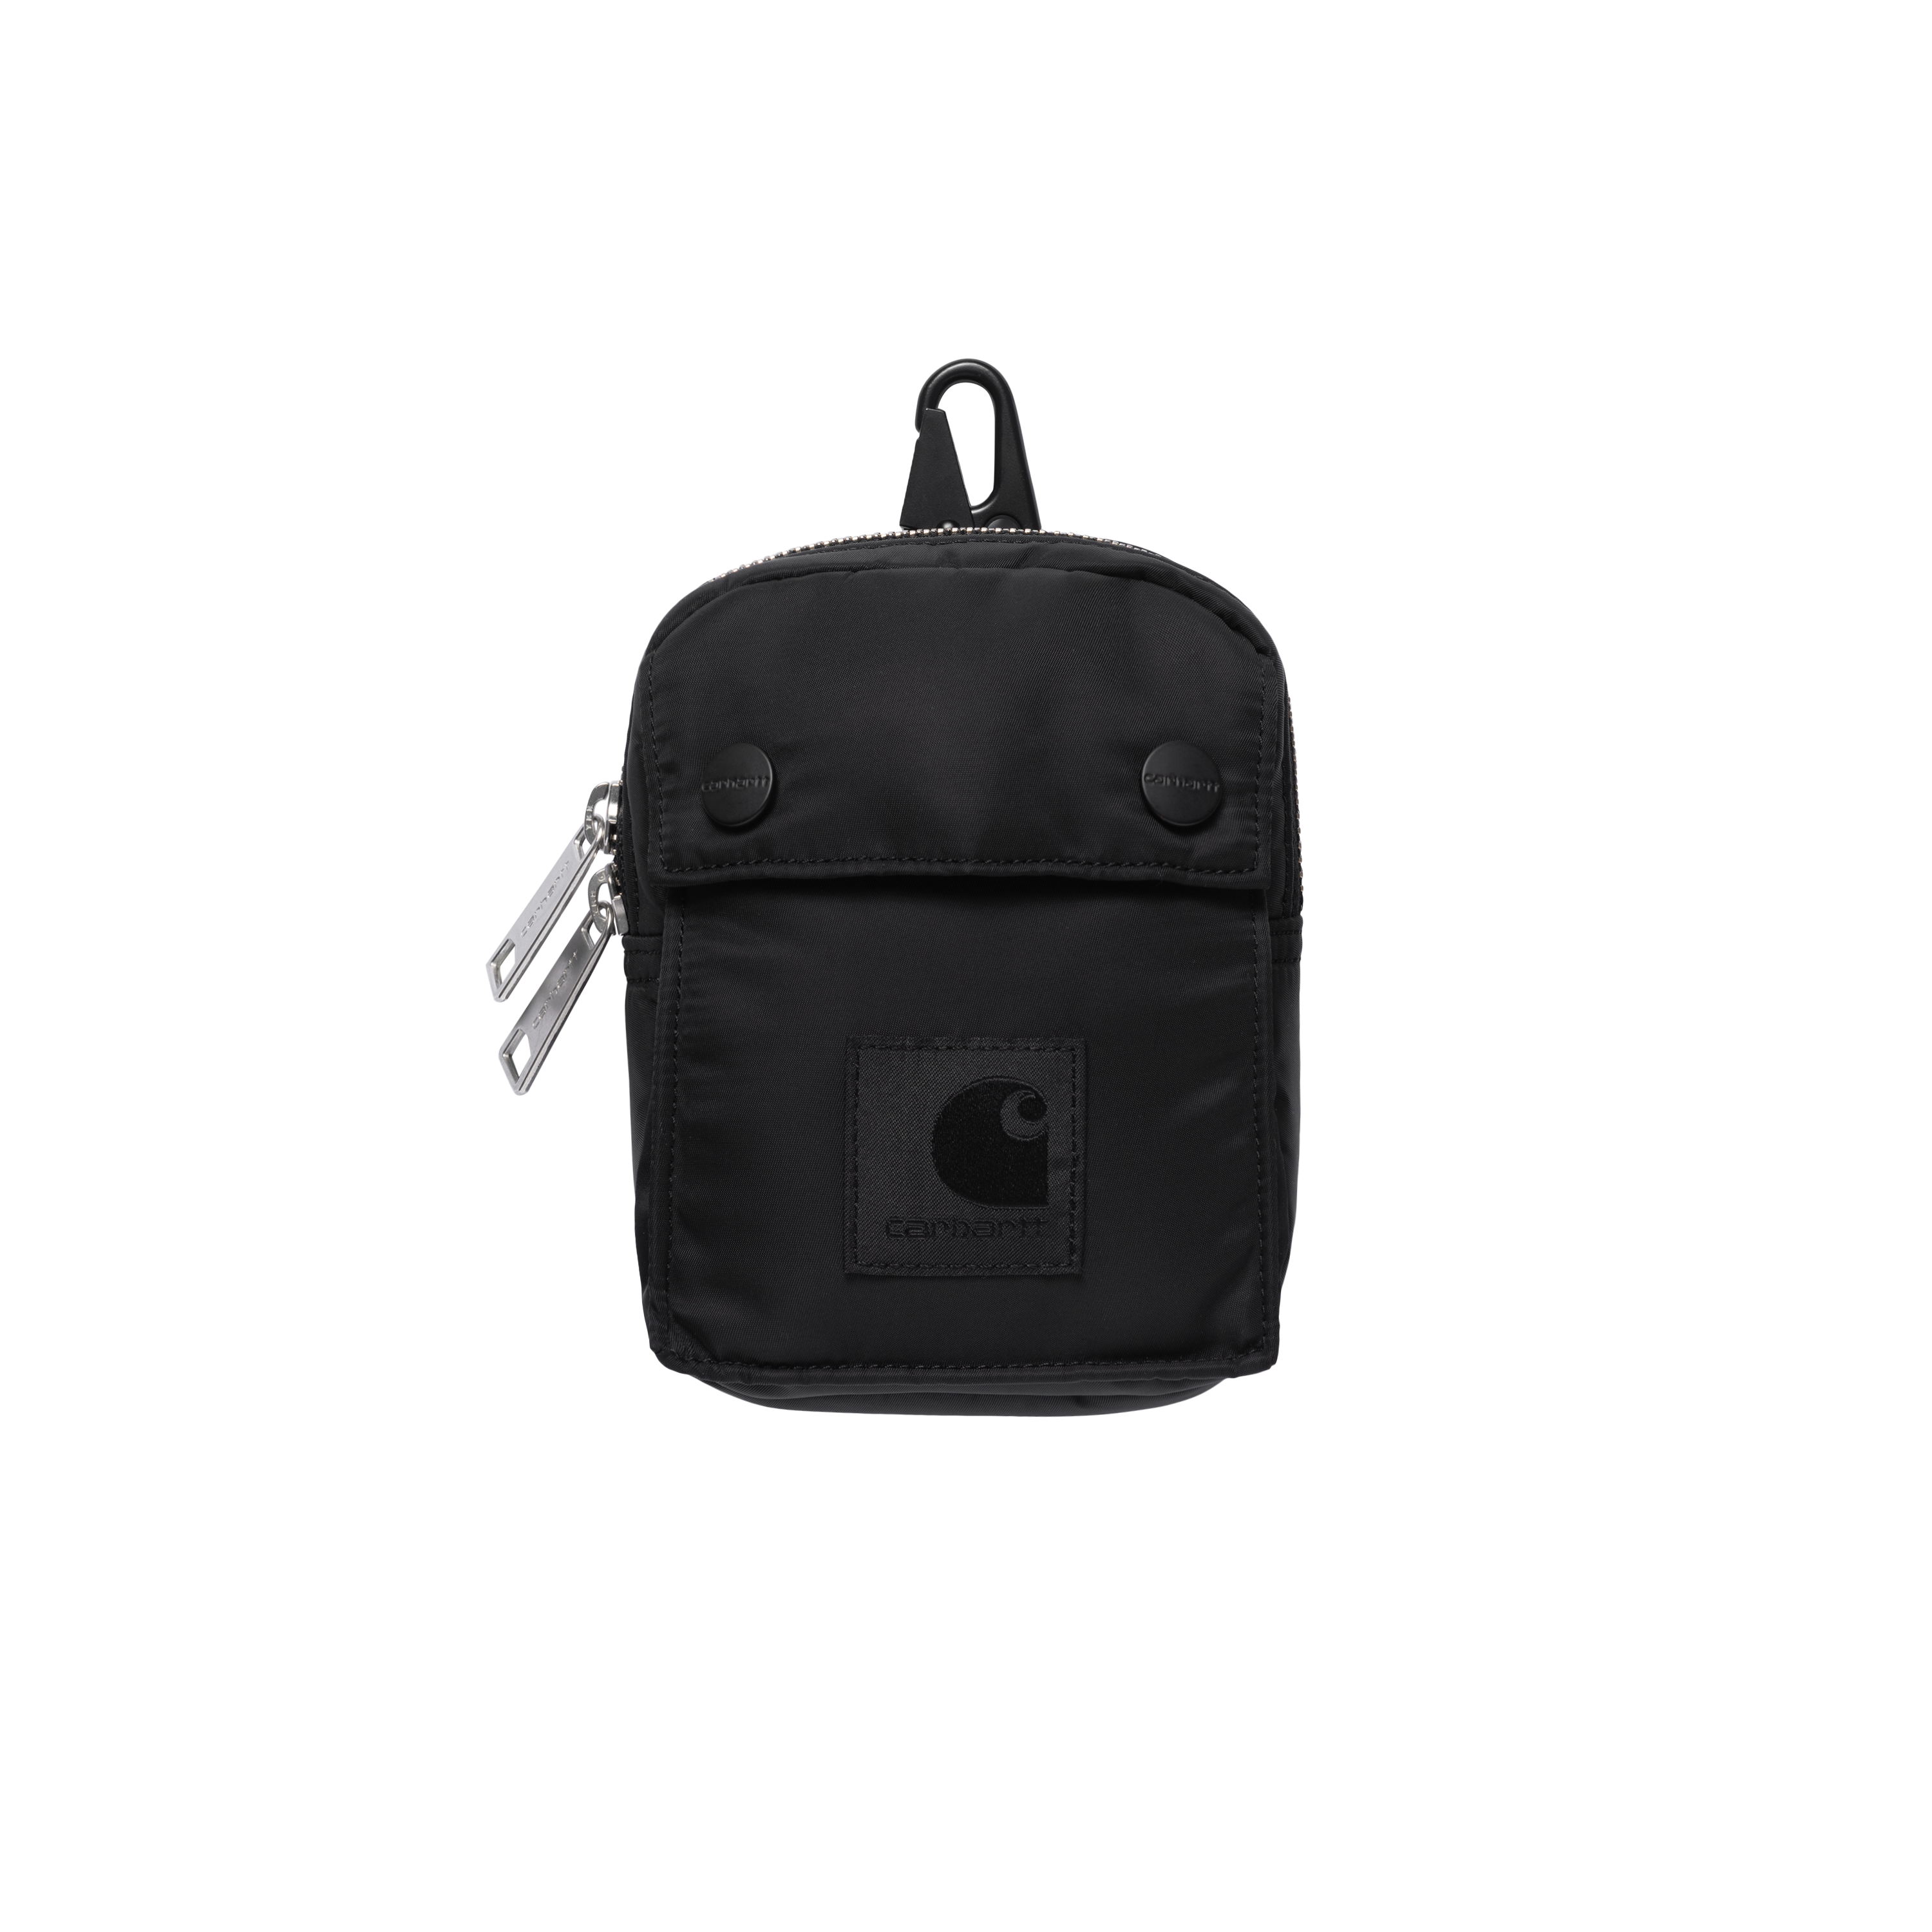 Carhartt WIP Otley Small Bag in Black